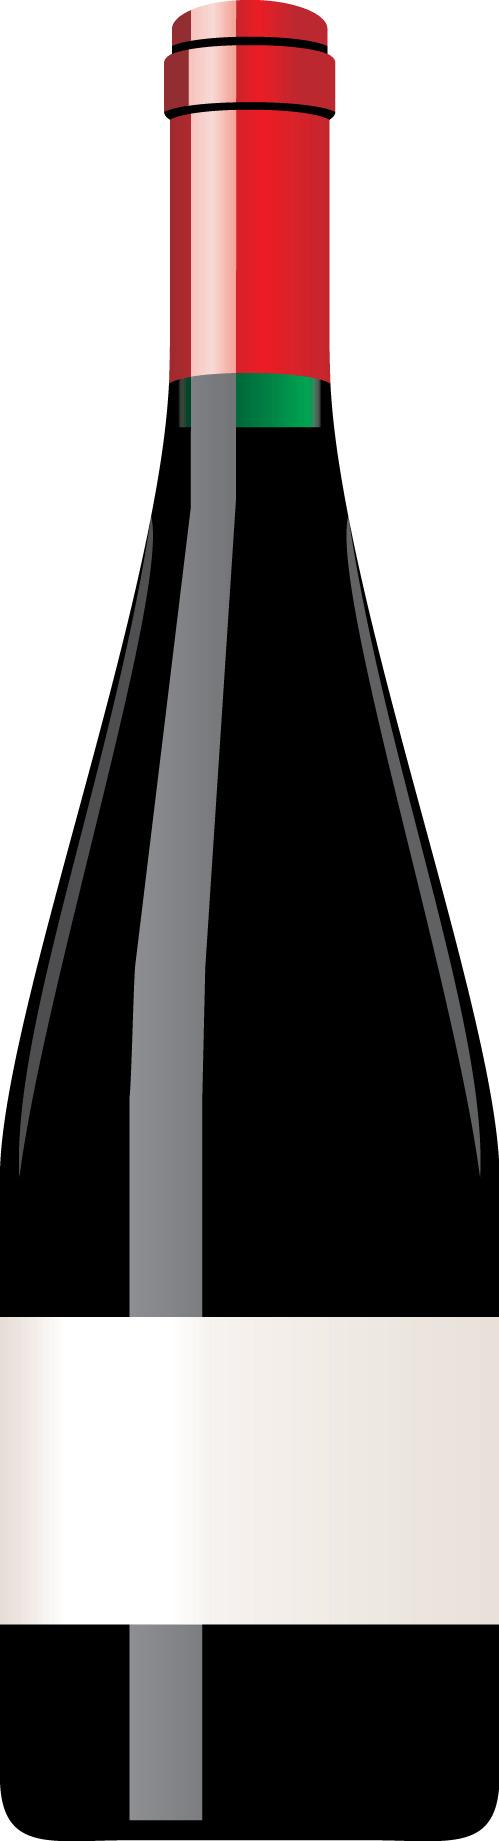 Bottle Of Wine Clipart png transparent